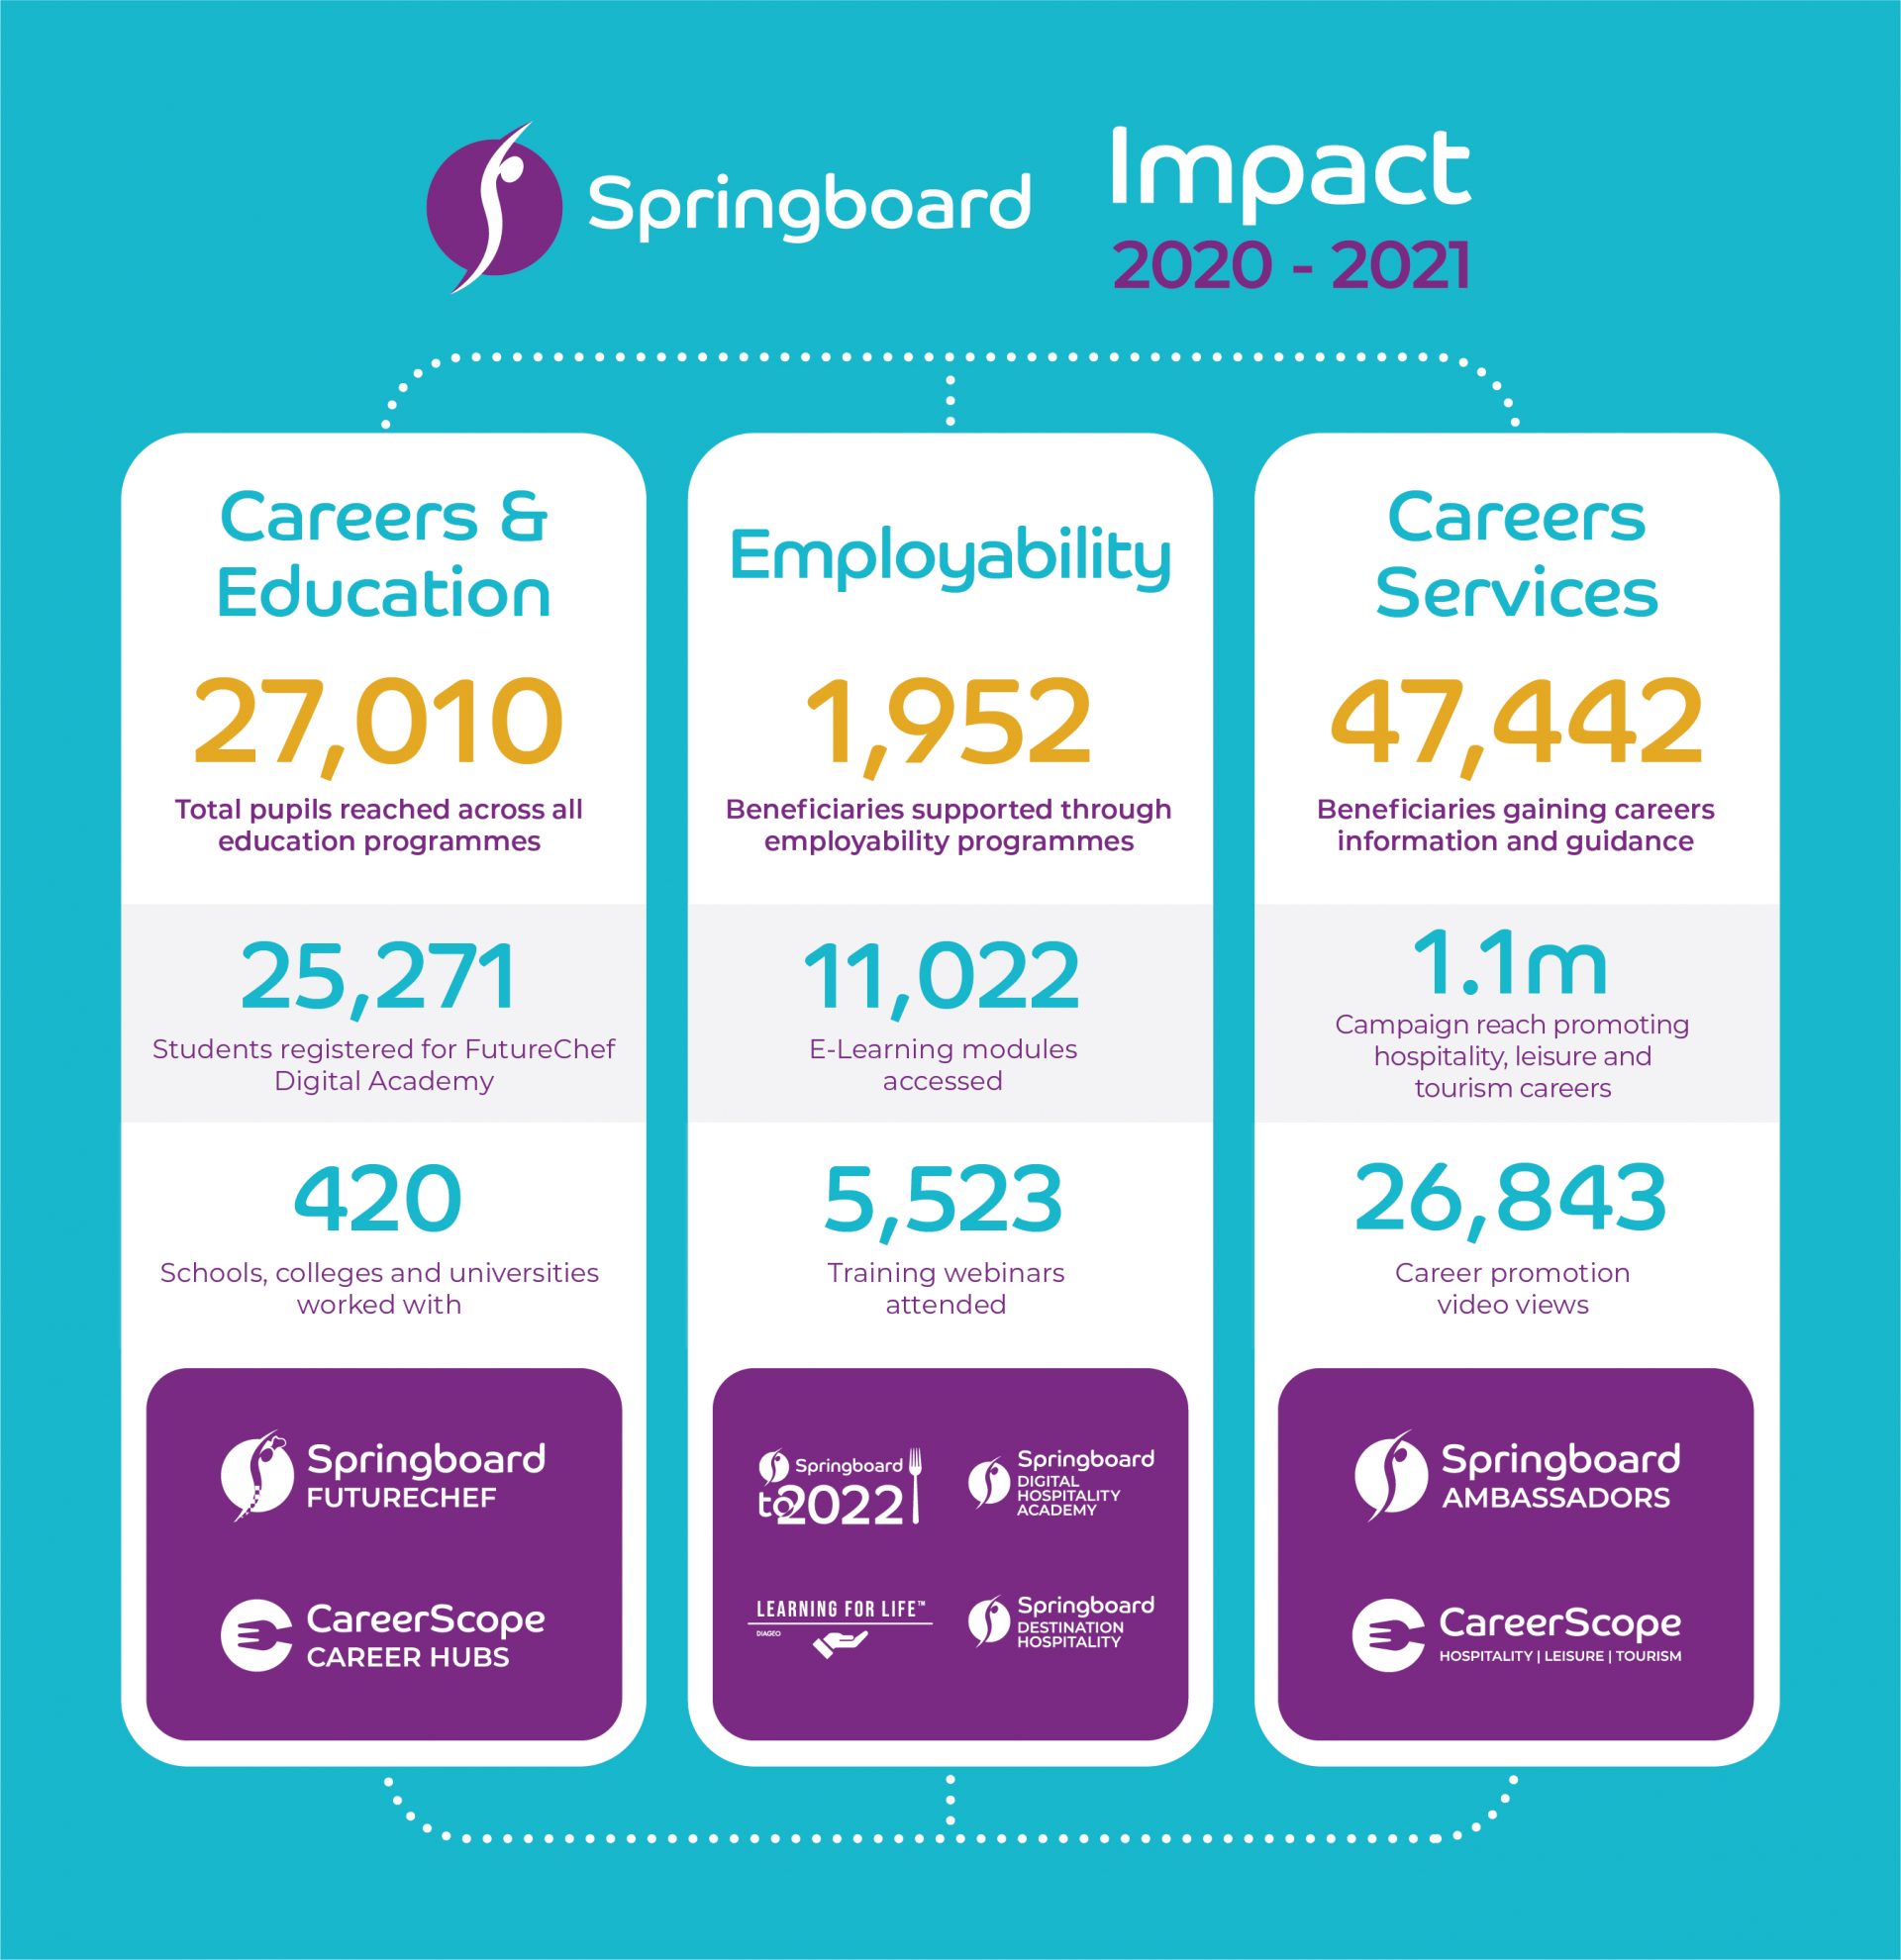 Springboard's Impact Report 2020-2021 Infographic